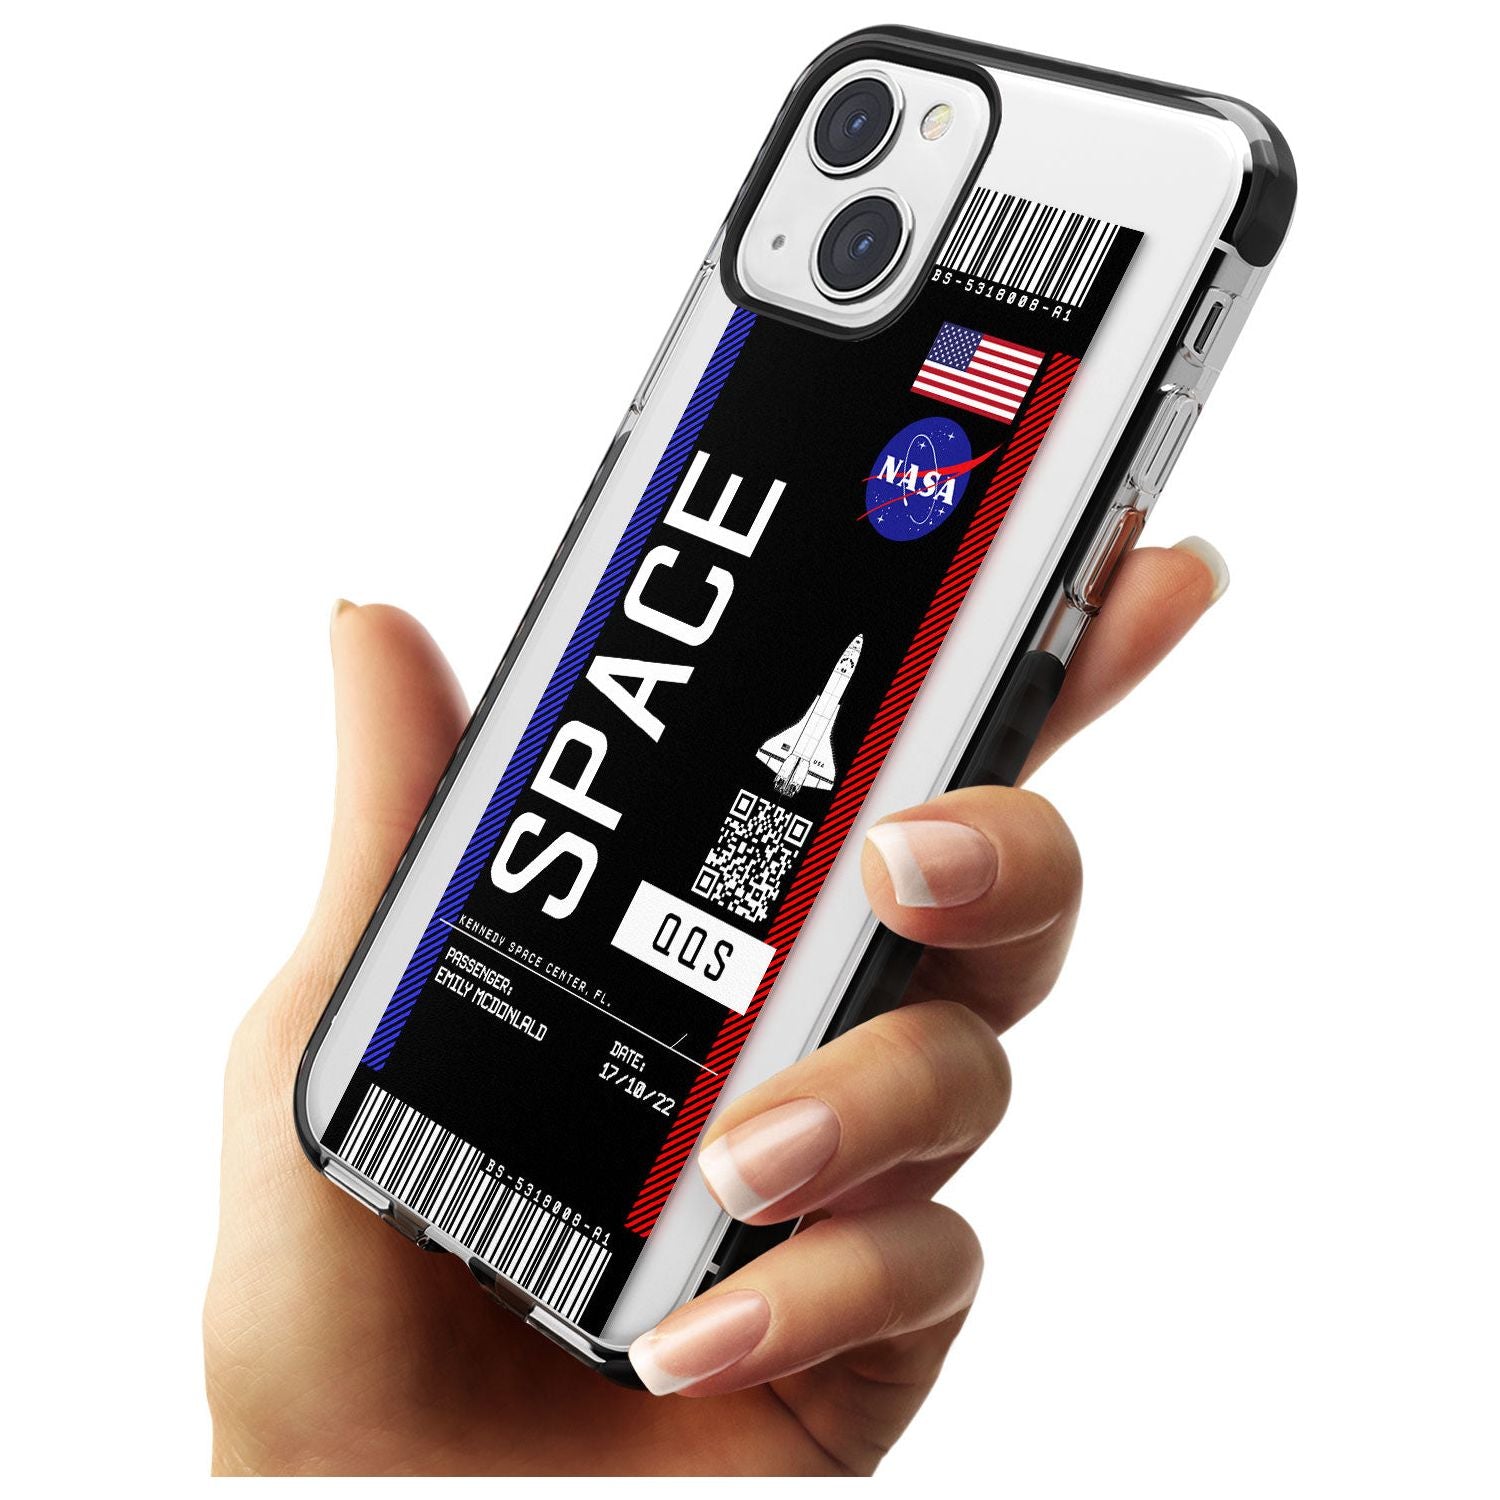 Personalised NASA Boarding Pass (Dark) Black Impact Phone Case for iPhone 13 & 13 Mini